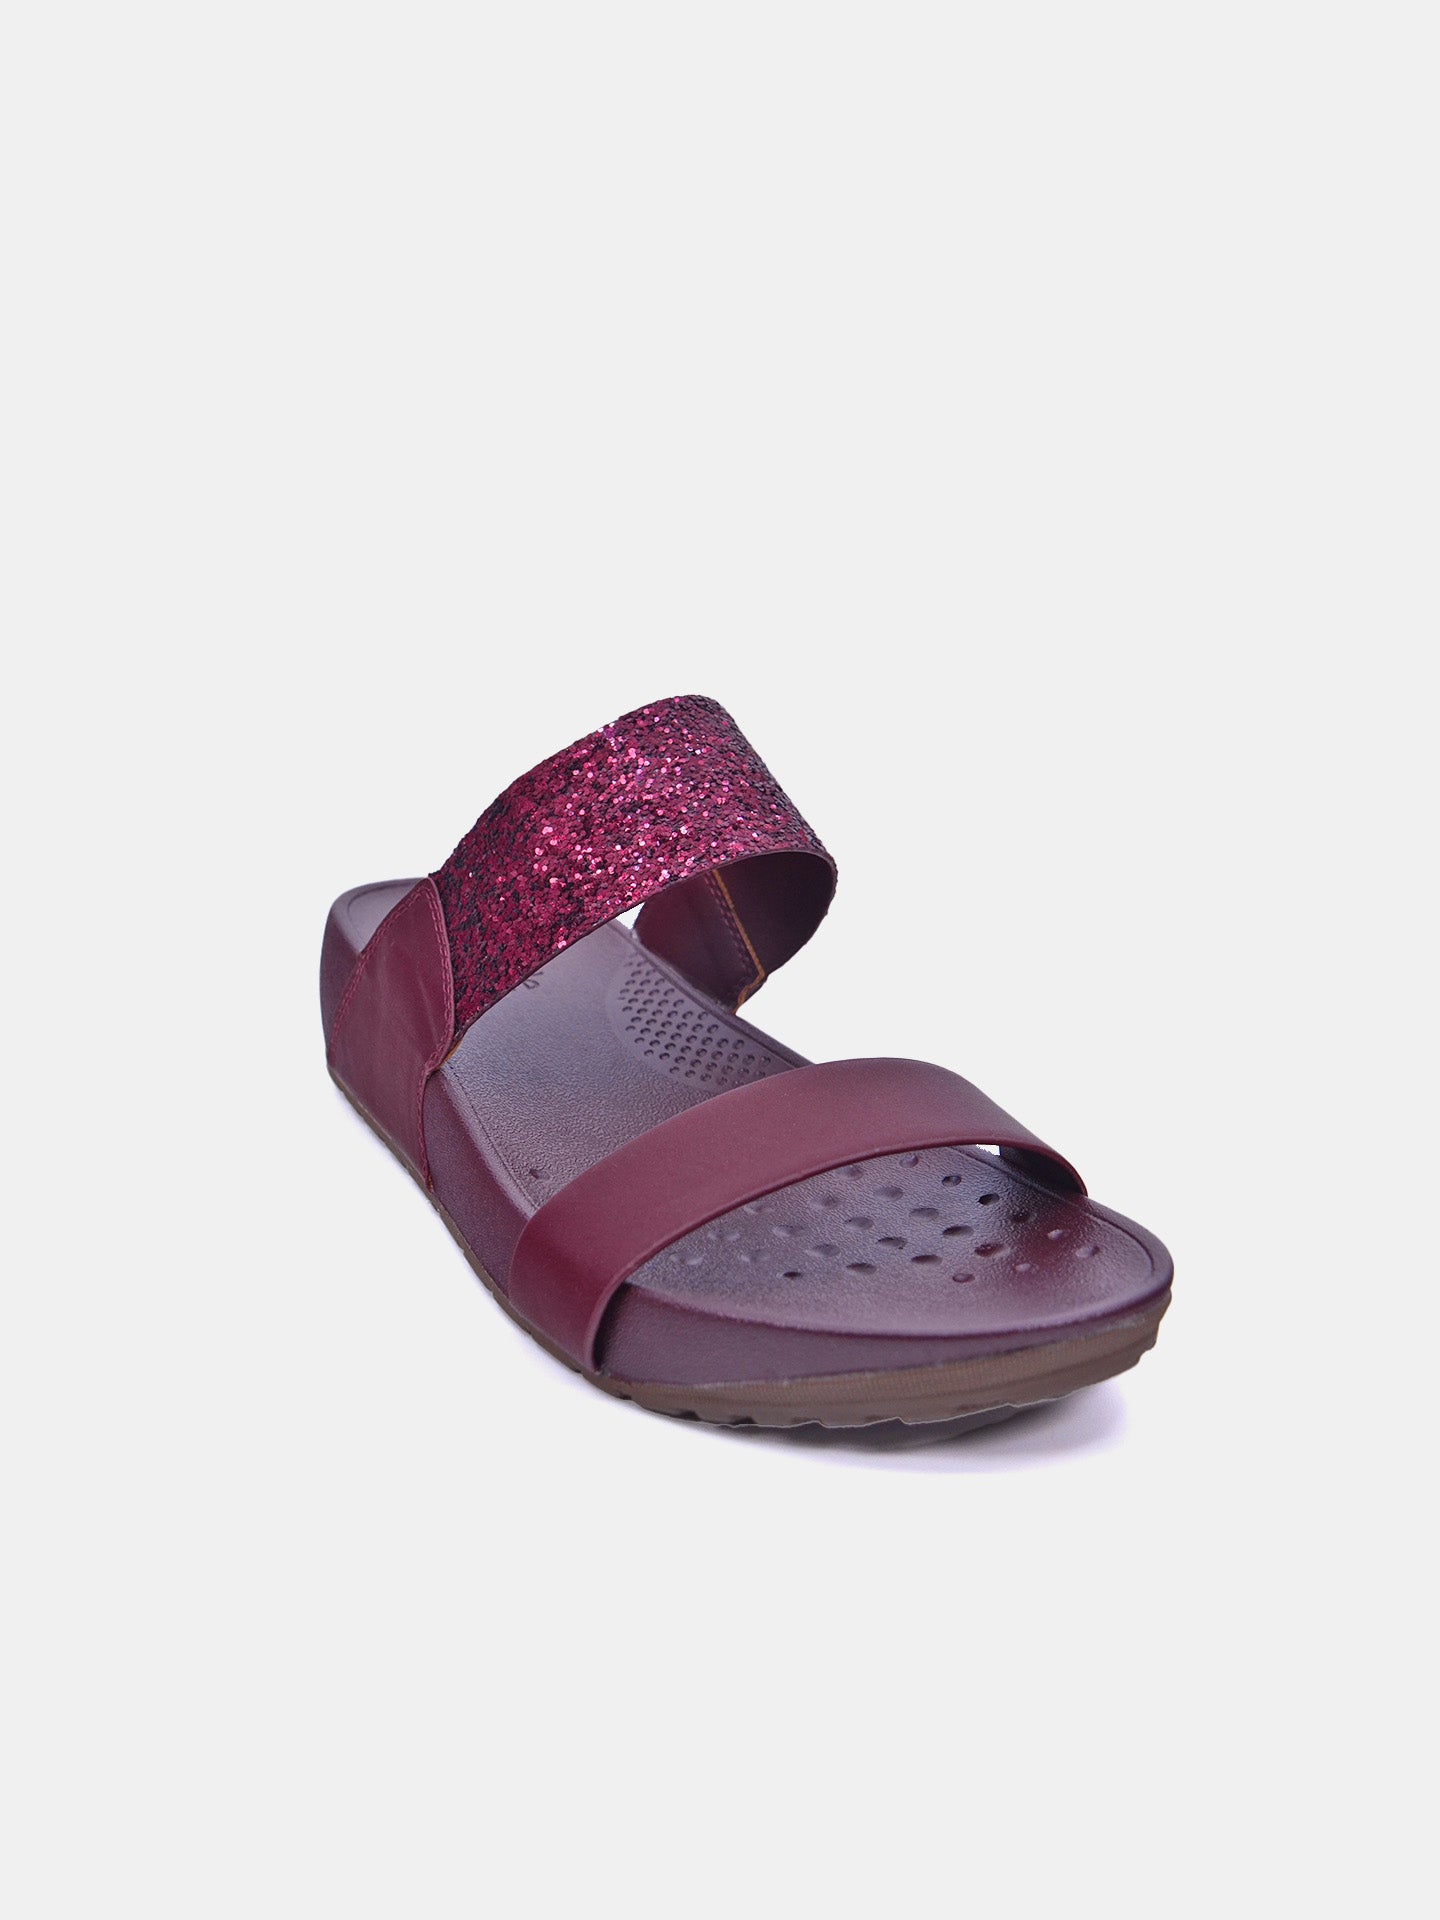 Michelle Morgan RJL187-03B Women's Sandals #color_Maroon